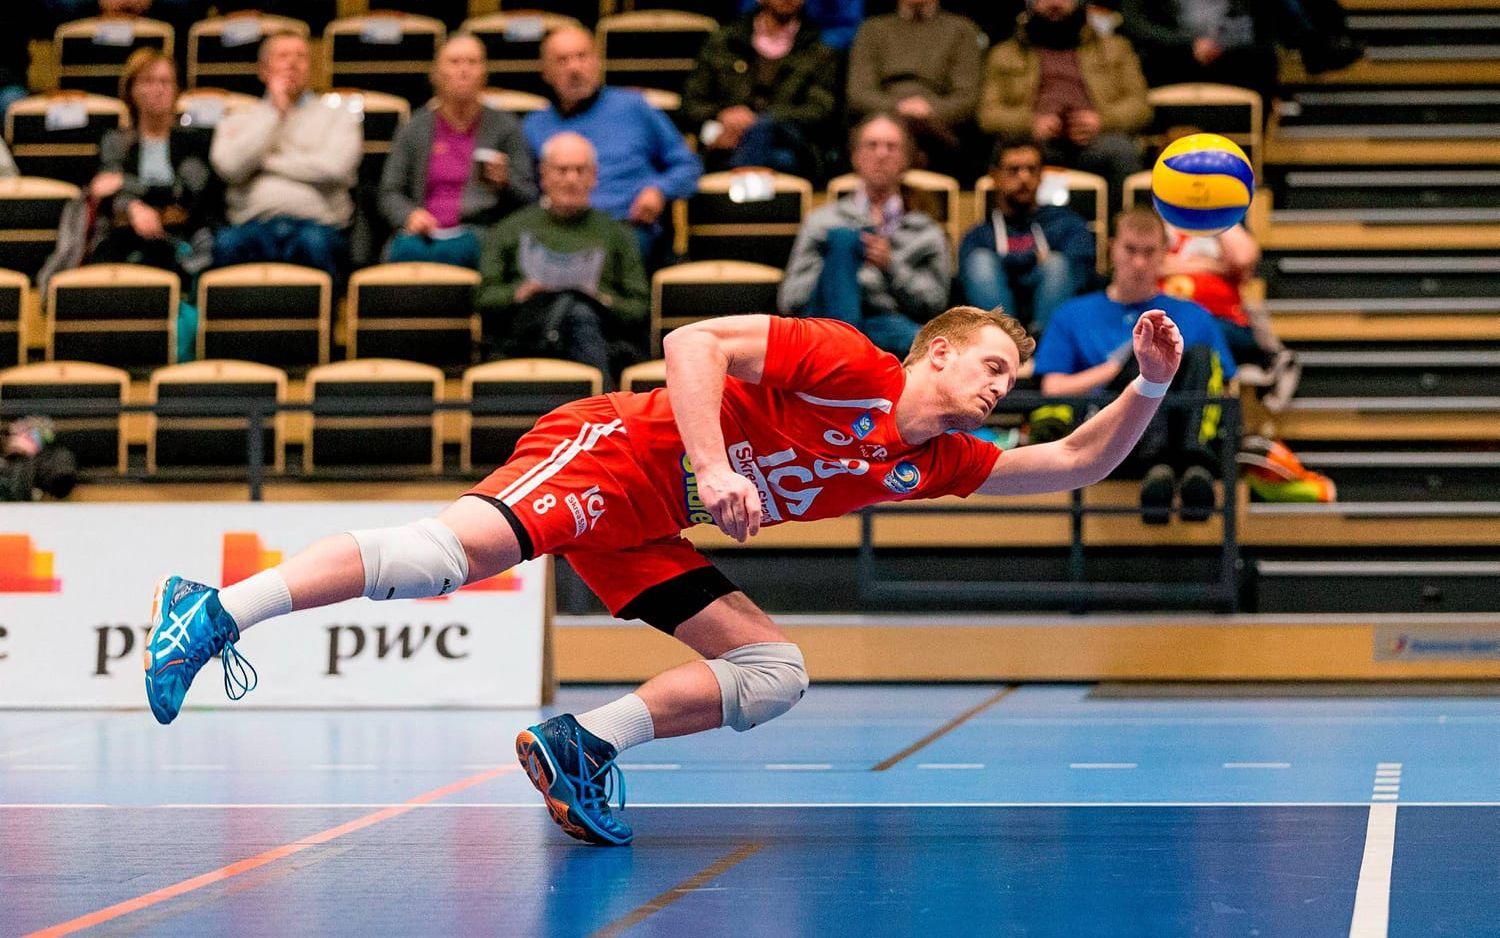 "Konkurrens är utvecklande", menar Falkenbergs Johan Eriksson. Bild: Glenn Unger / Falkenbergsbild.se